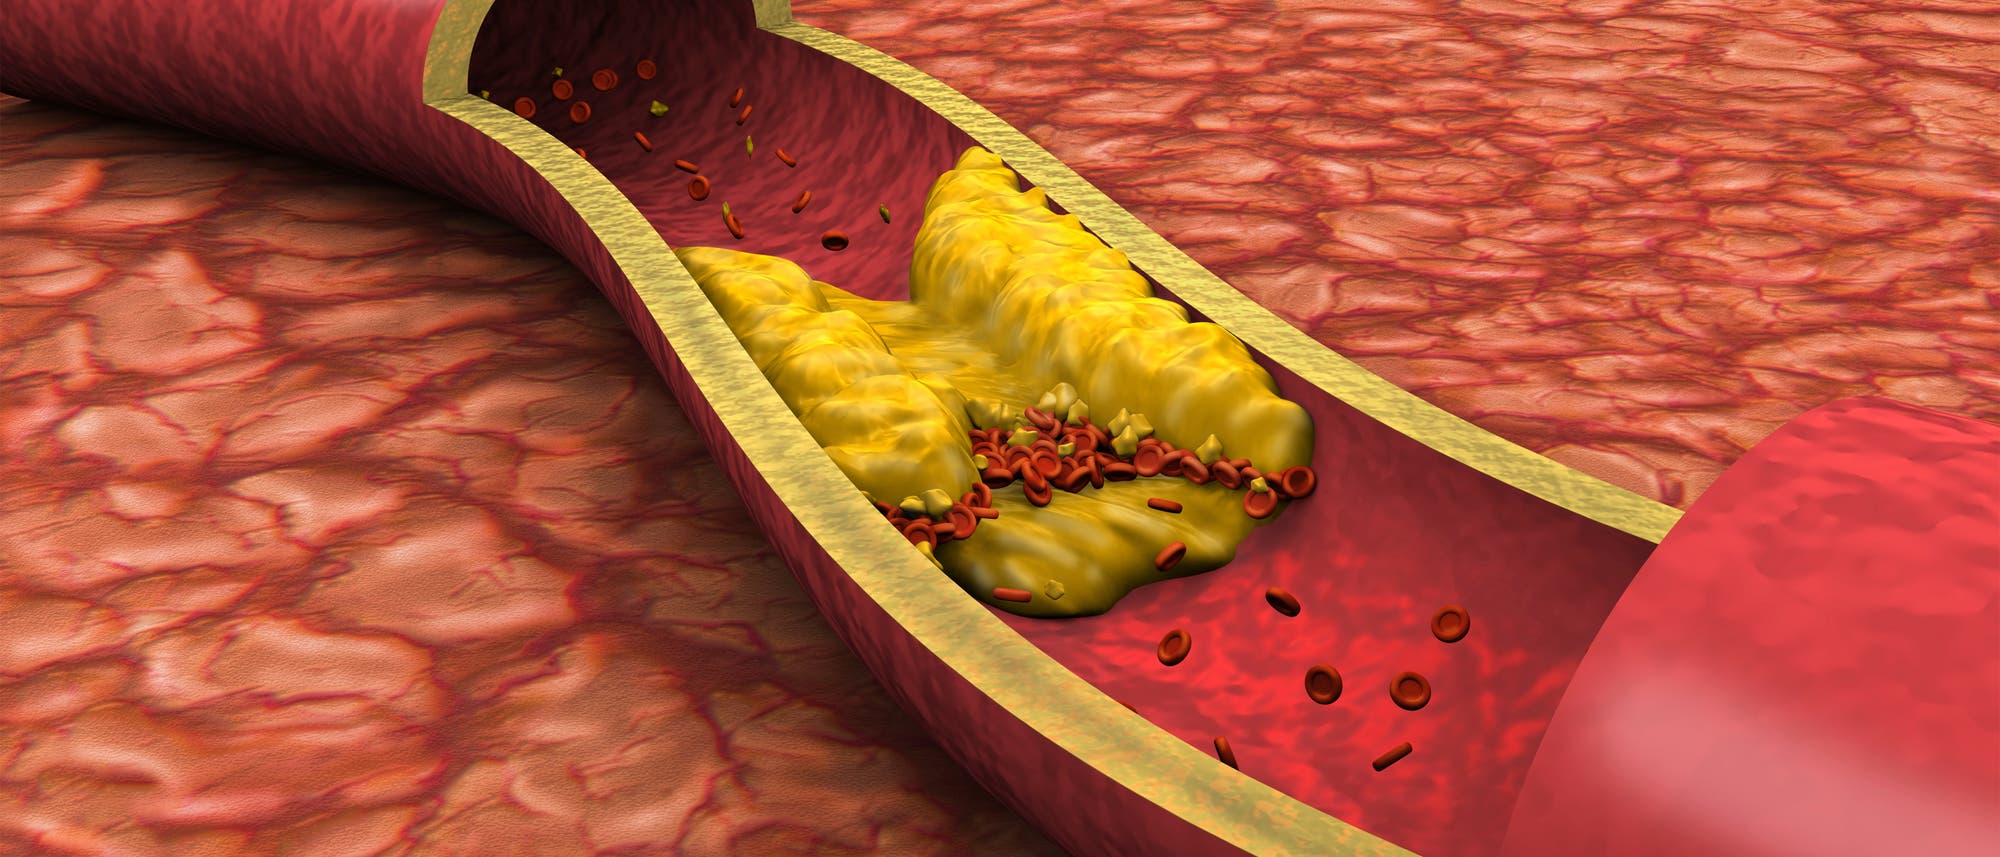 Hohe Cholesterinspiegel verursachen Arteriosklerose - oder?